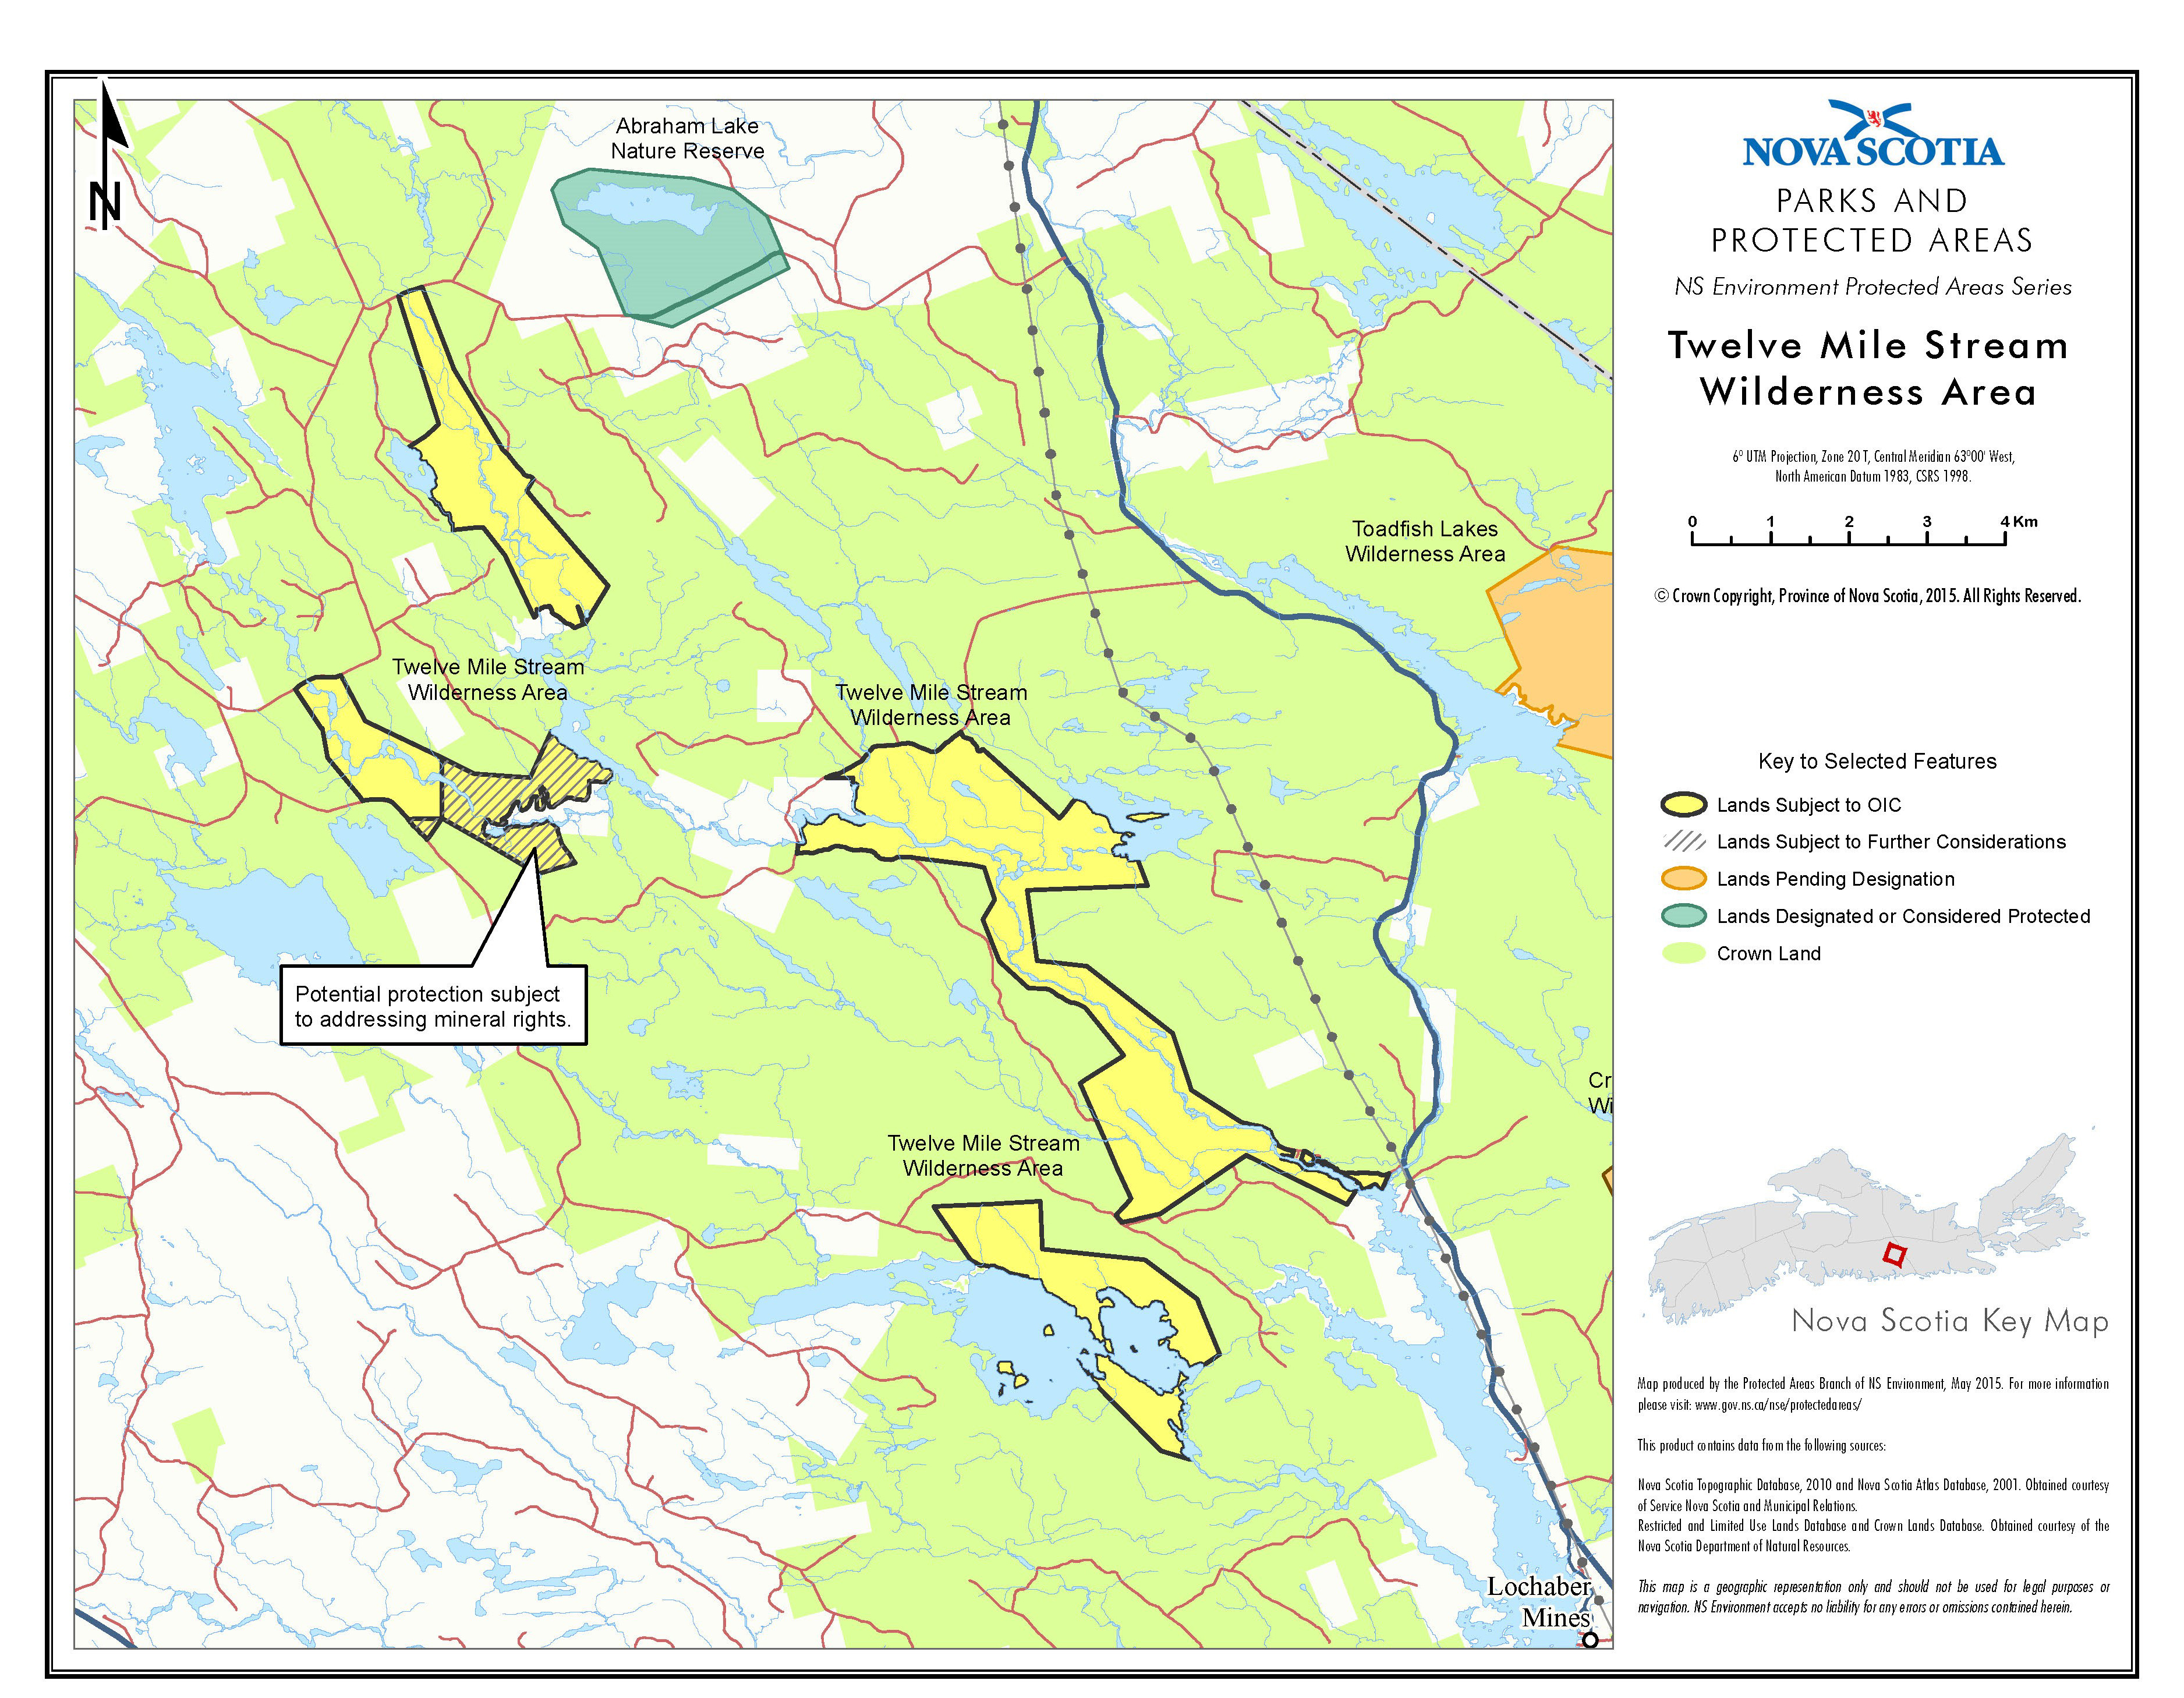 Approximate boundaries of Twelve Mile Stream Wilderness Area